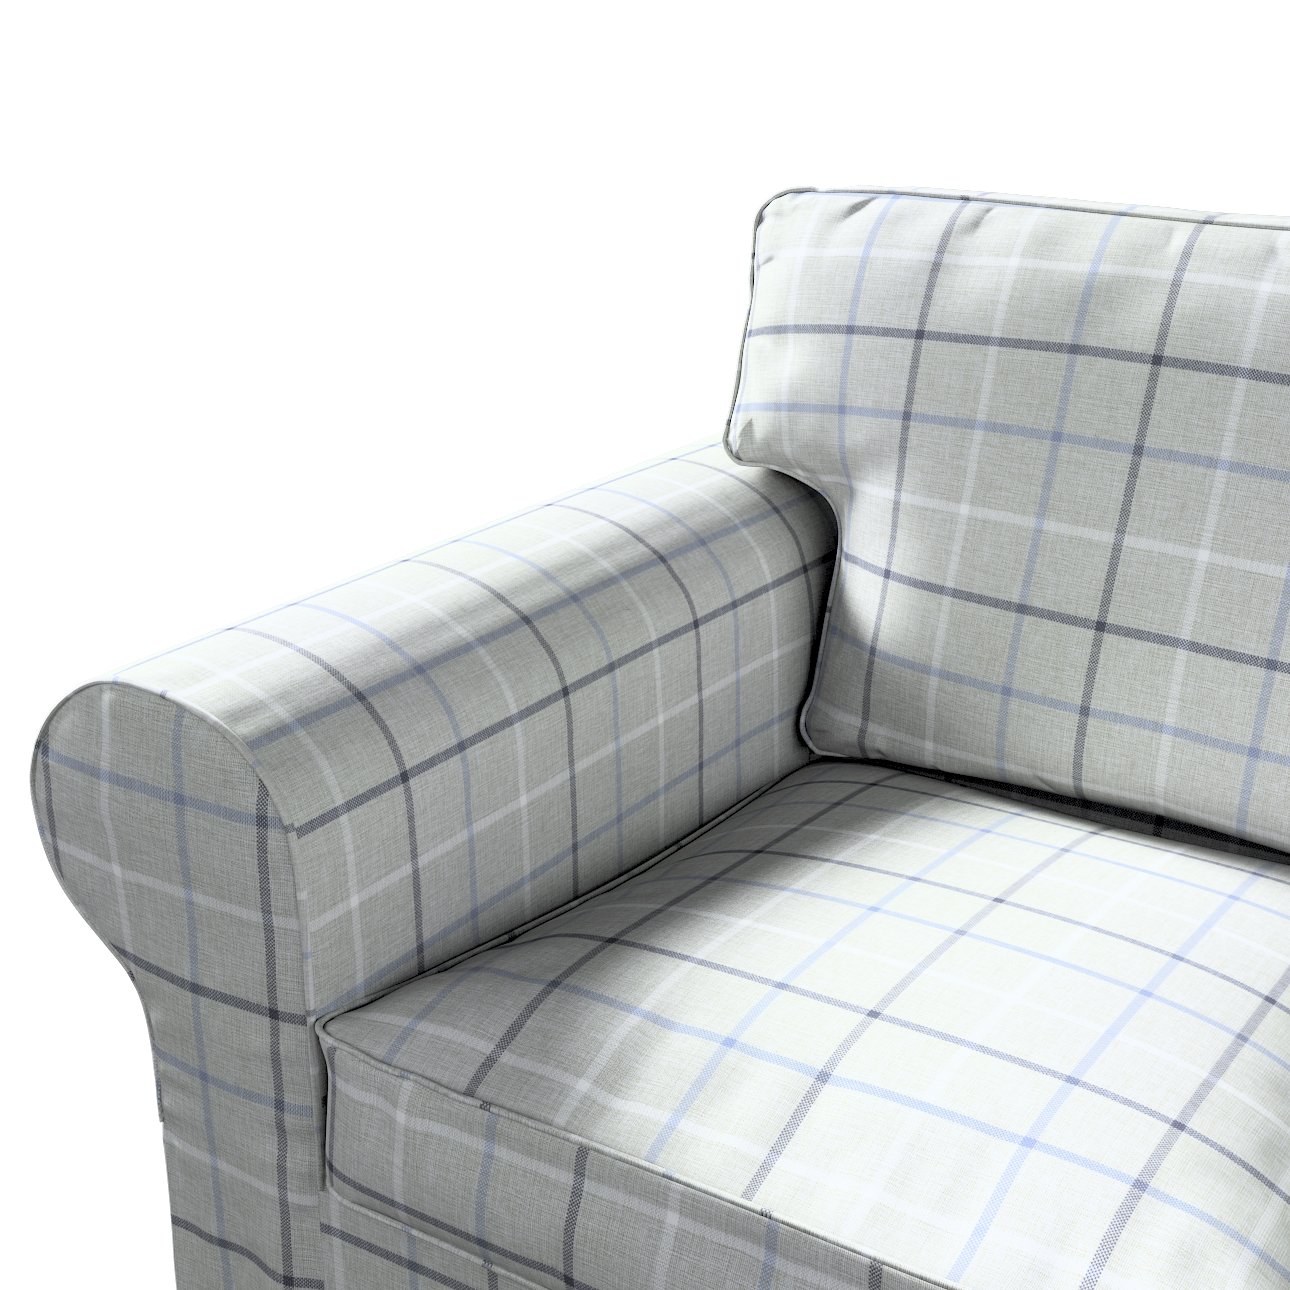 Plaid Sofa Slipcover Black and White Tartan Pattern on 70 Seat